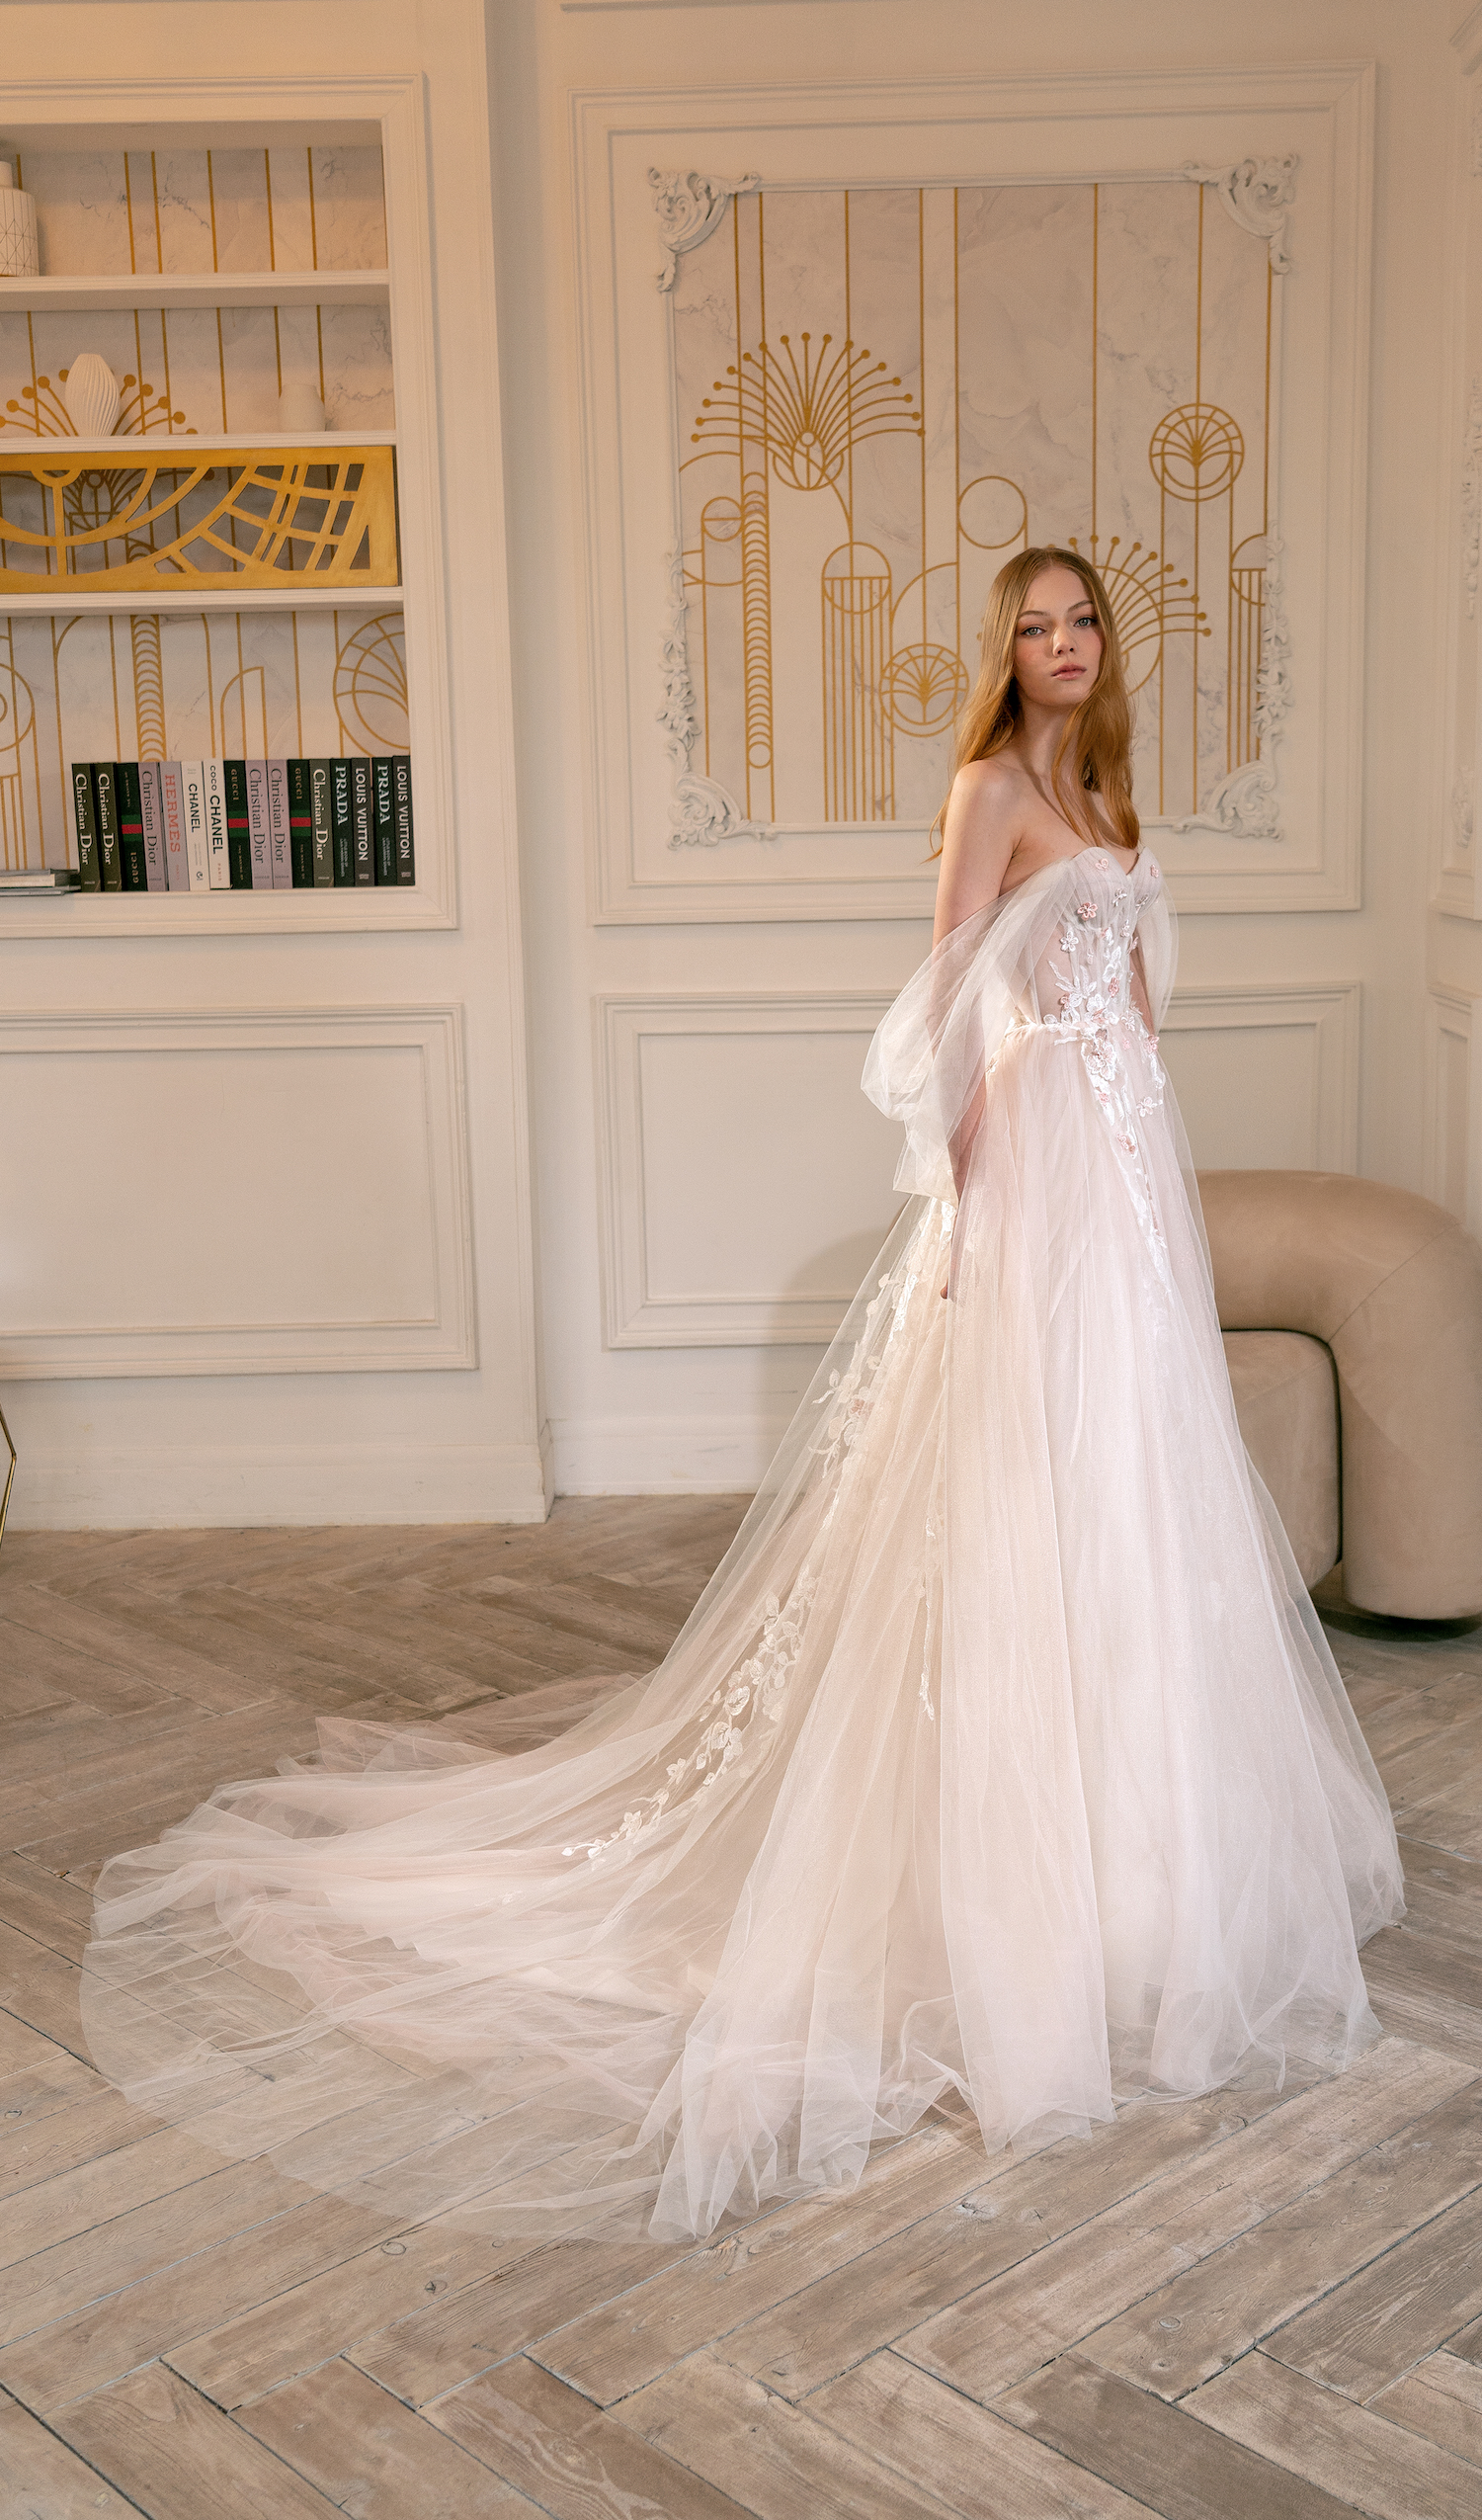 Louis Vuitton Wedding Dress Price